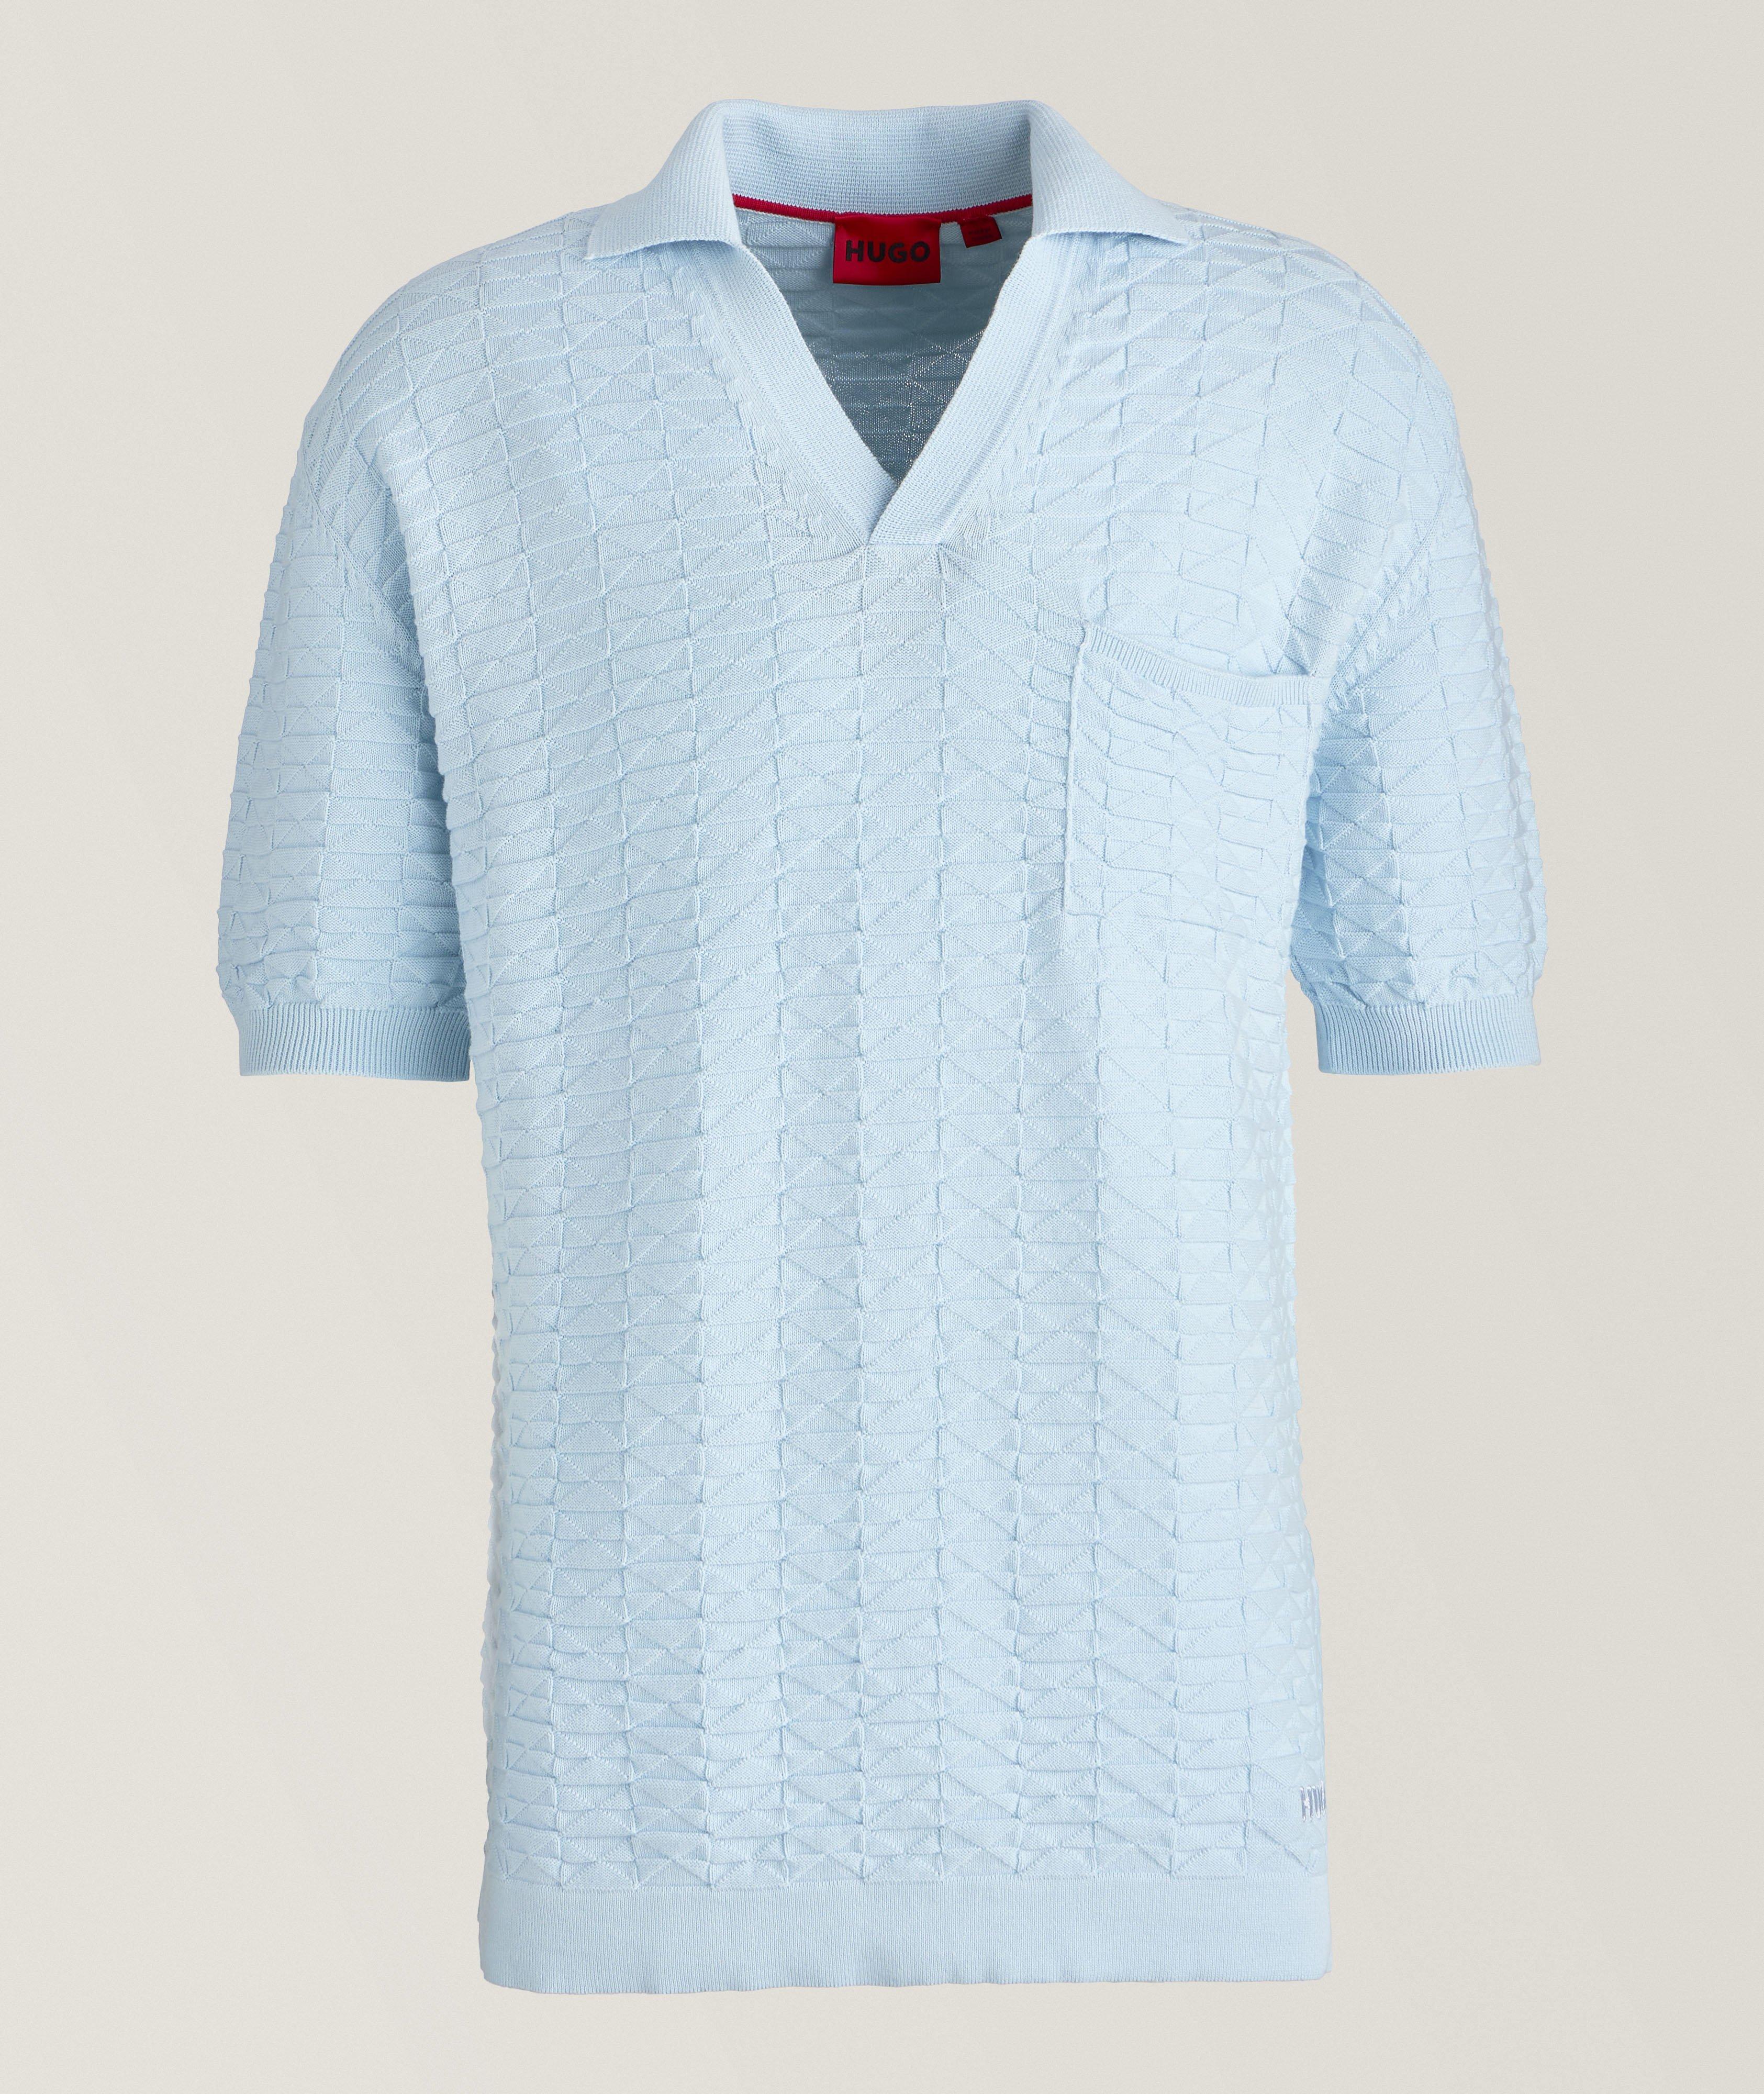 Textured Geometric Cotton Polo image 0